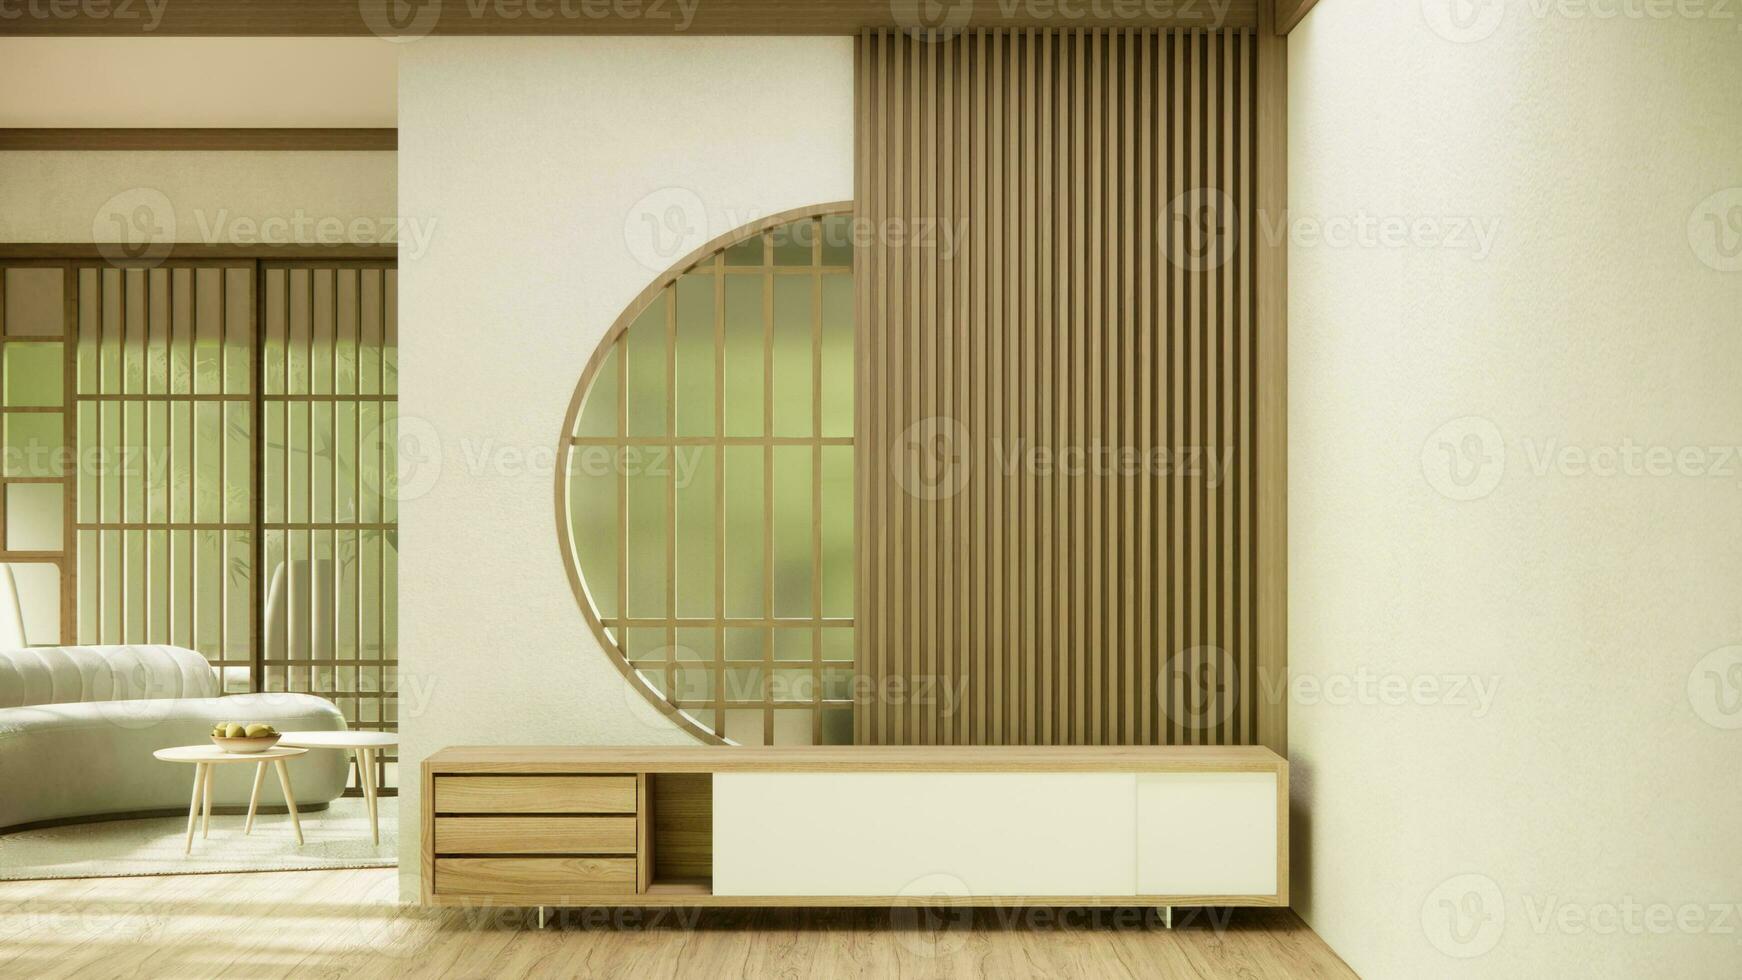 kabinet in gang schoon Japans minimalistische kamer interieur. foto